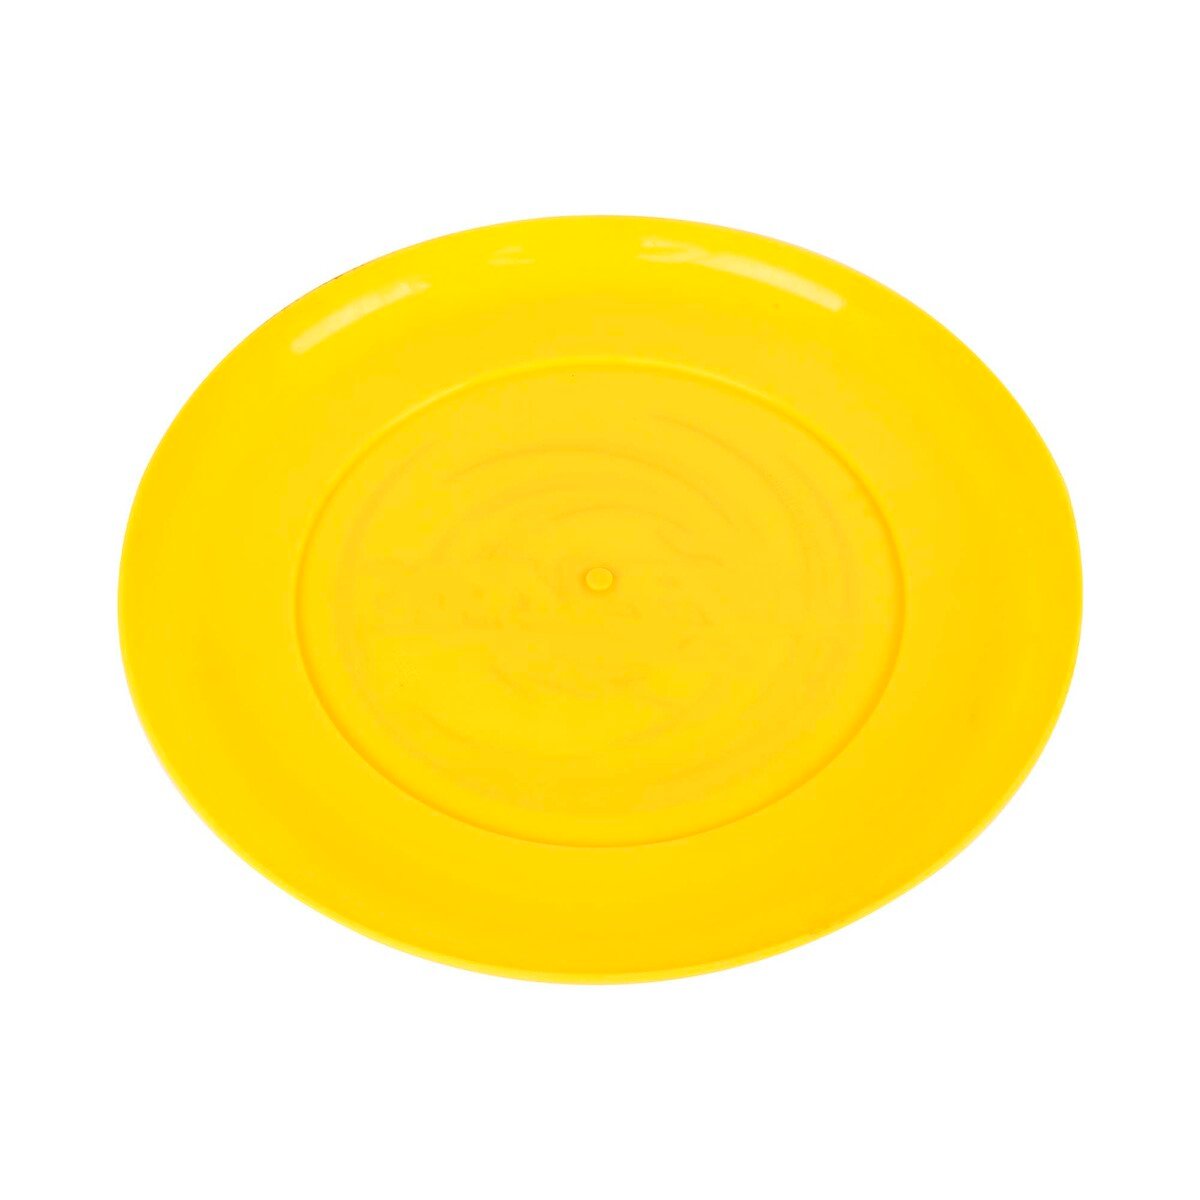 Sports Inc Frisbee, Yellow, ZY243